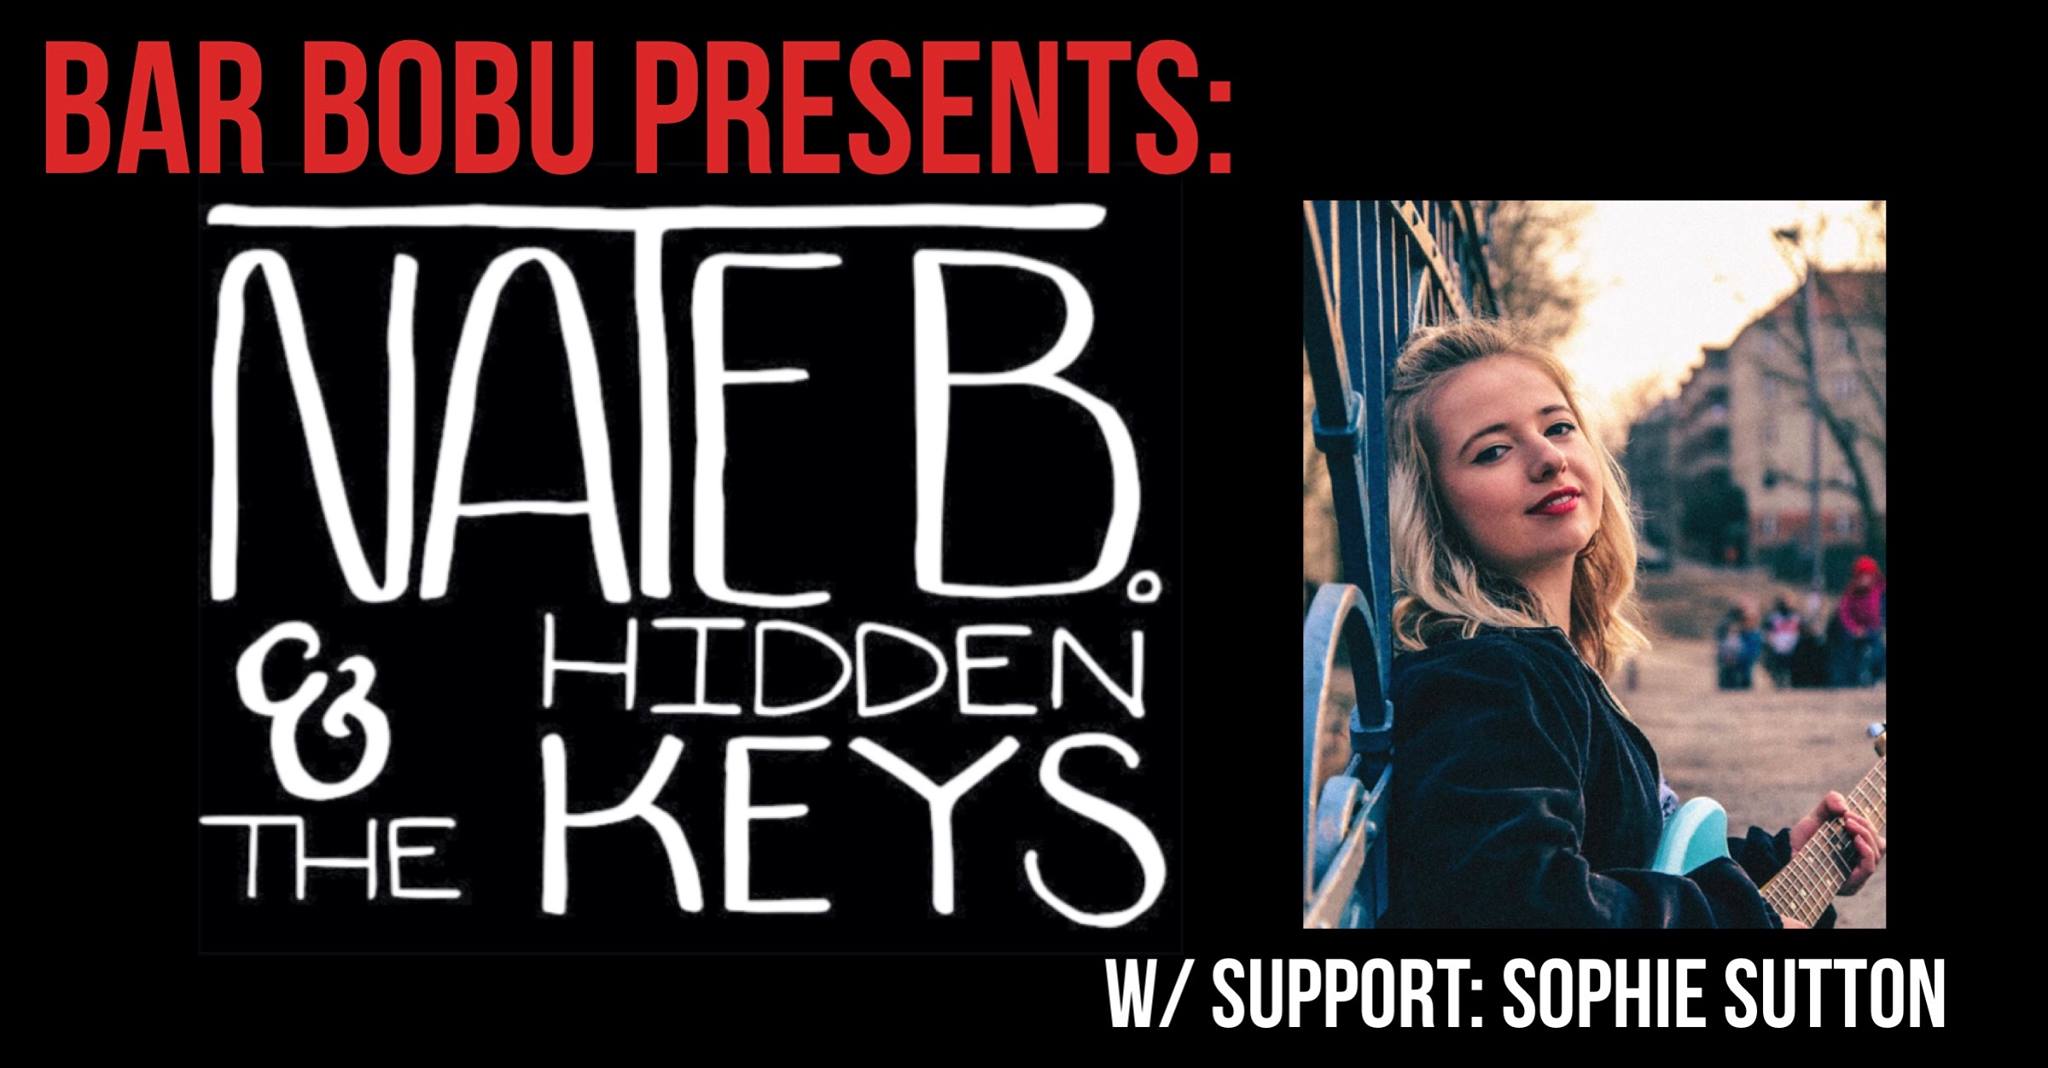 Nate B & the Hidden Keys play Bar bobu